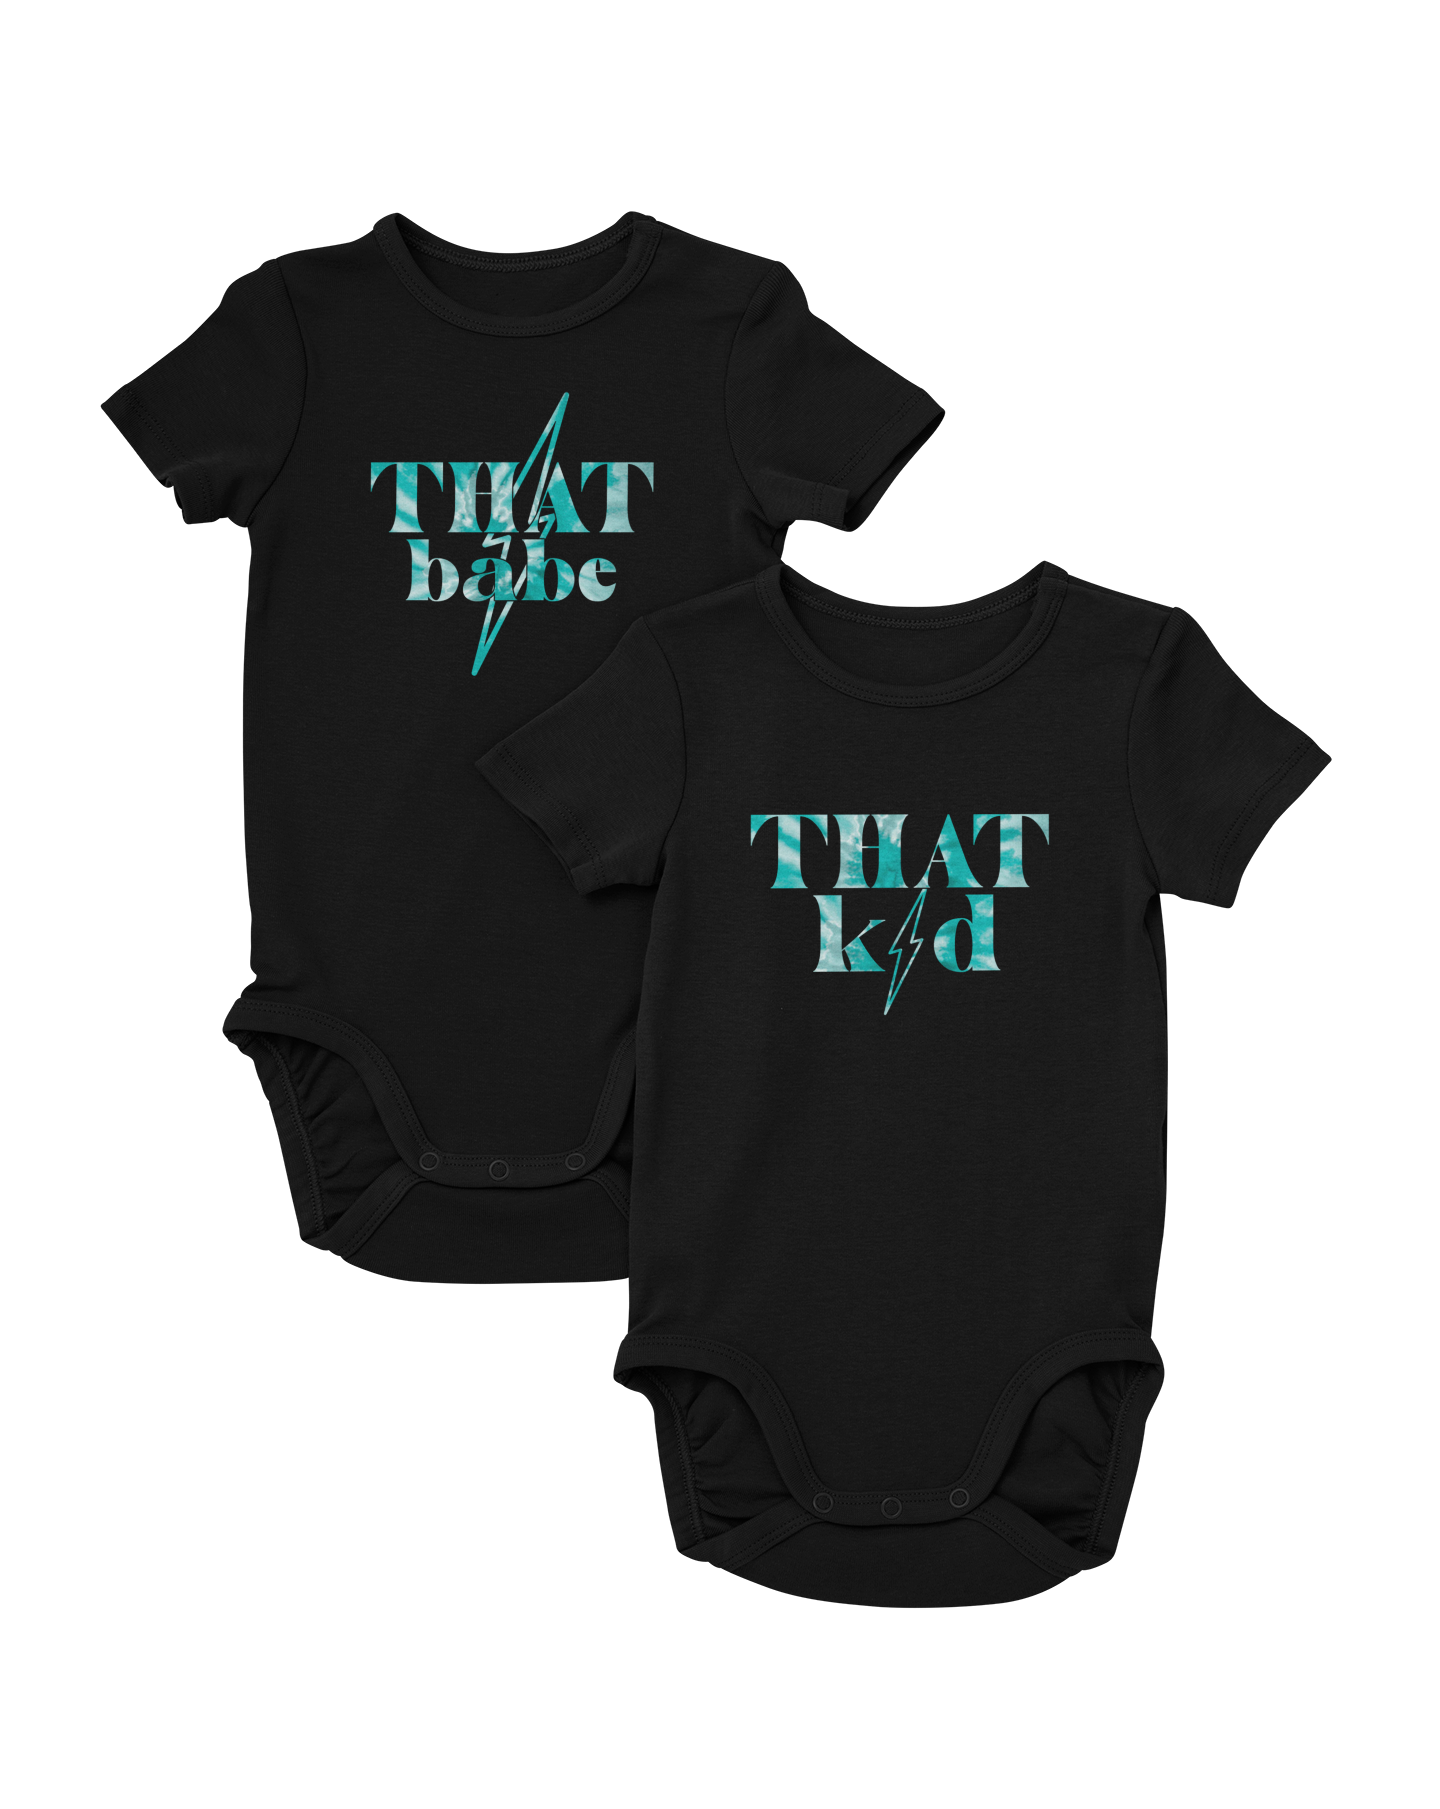 "That Babe" / "That Kid" Design